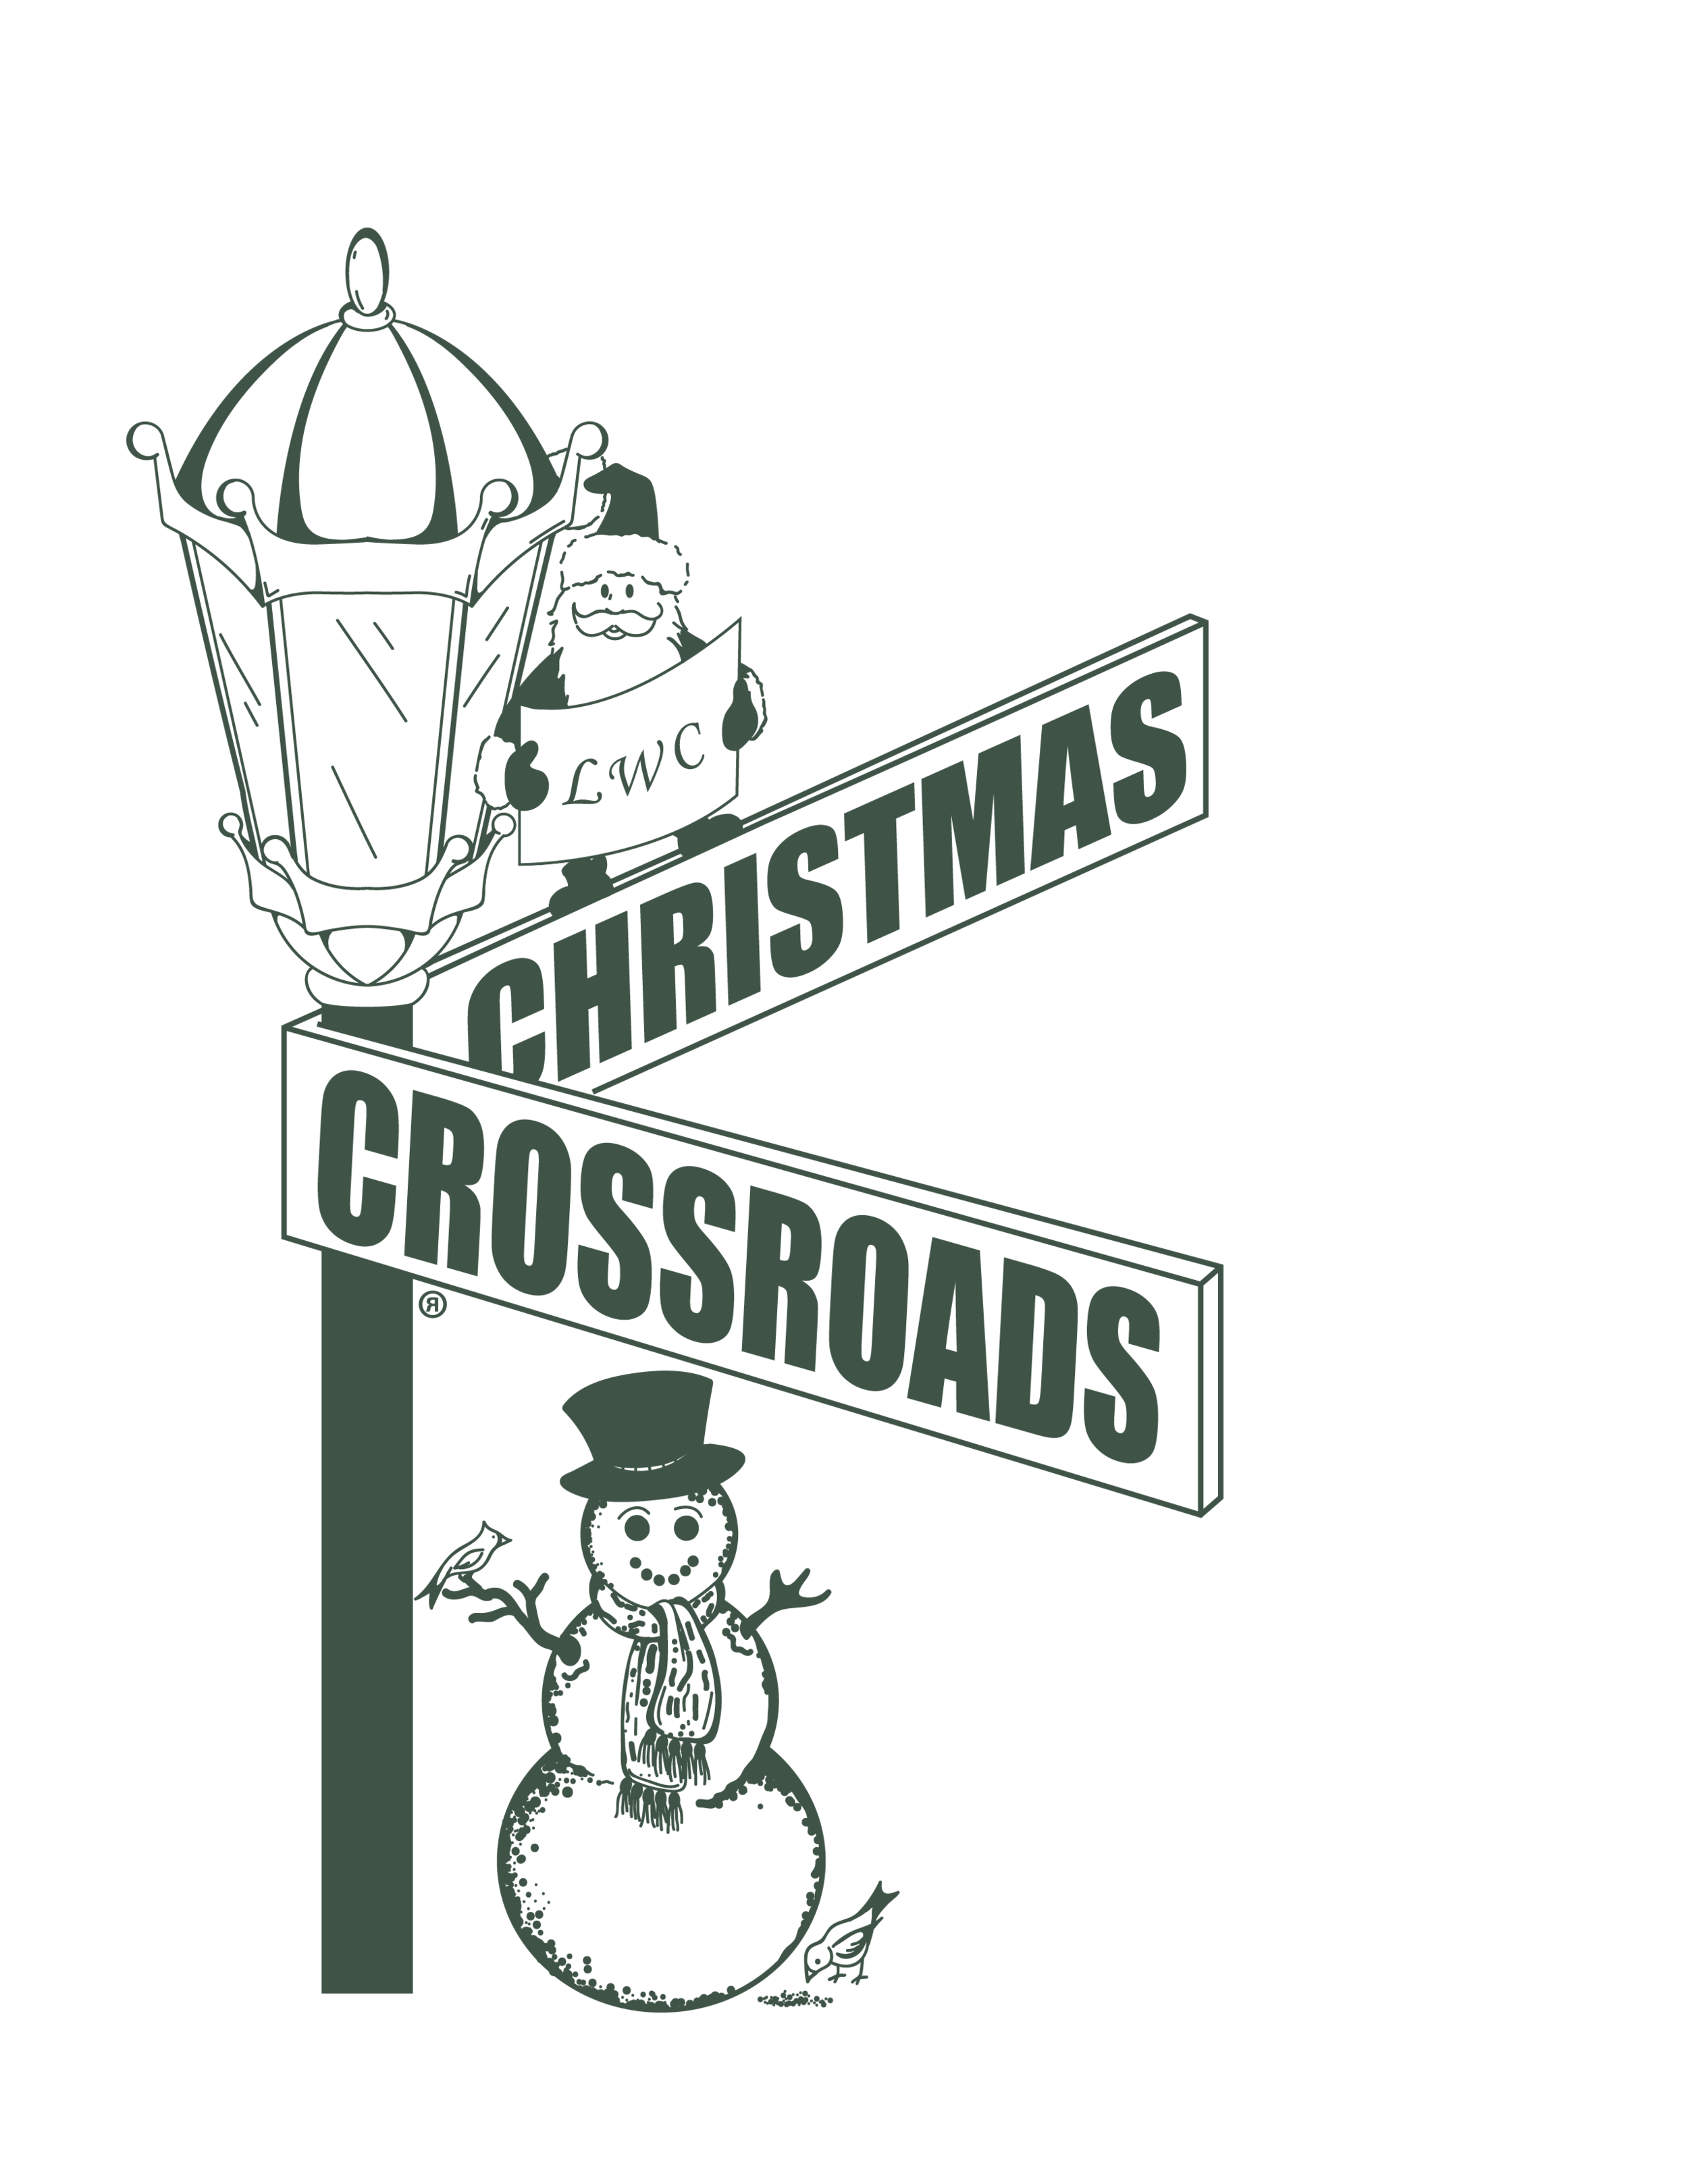 Christmas Crossroads